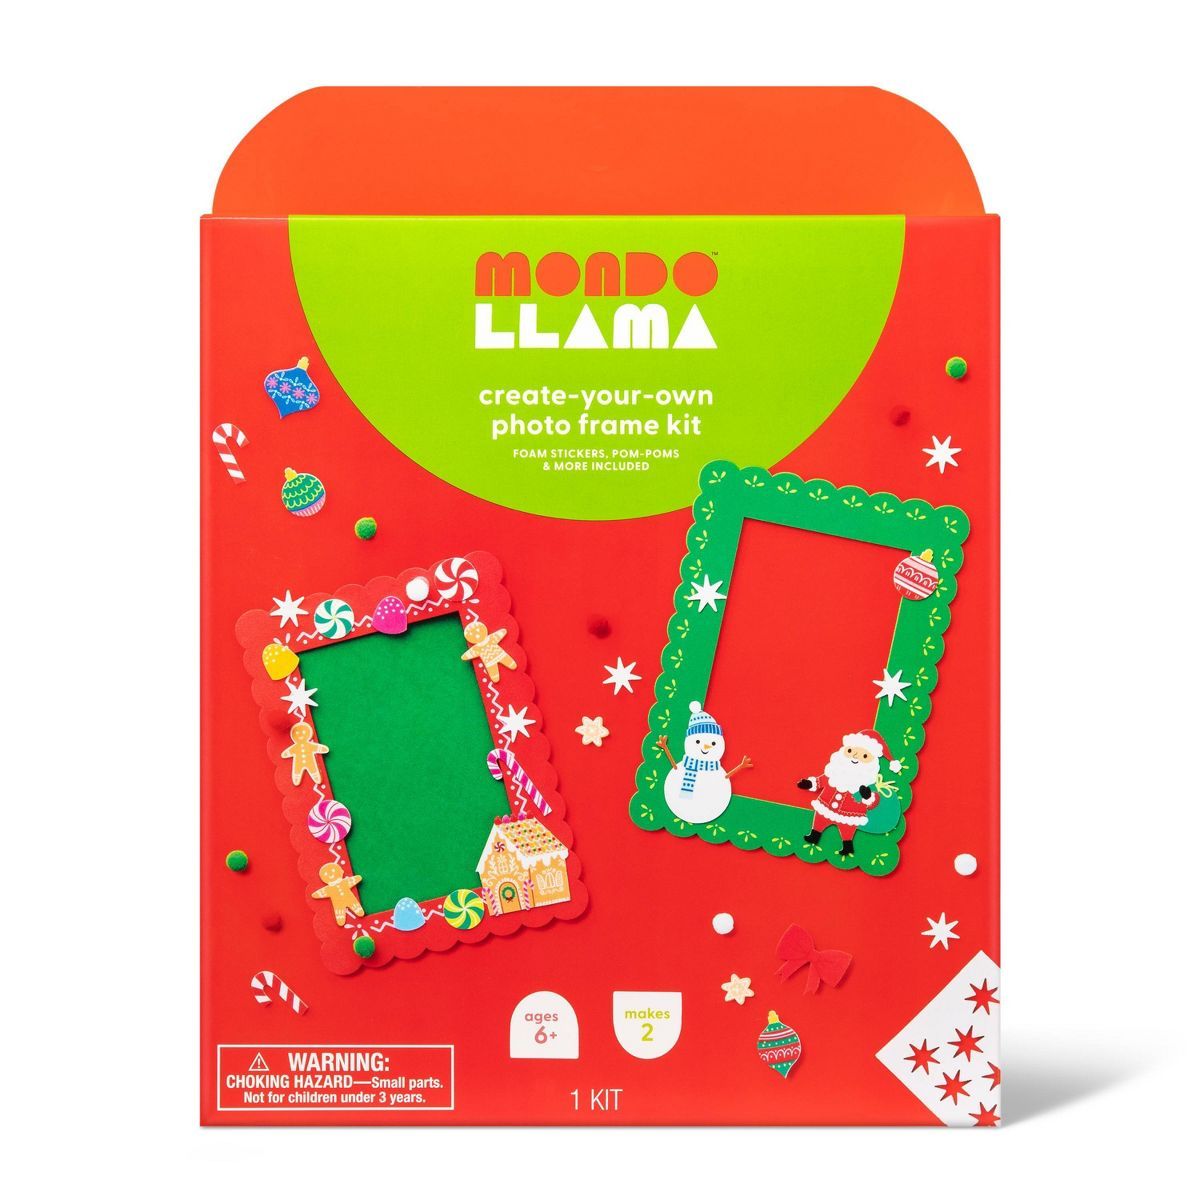 Create-Your-Own Photo Frame Kit - Mondo Llama™ | Target